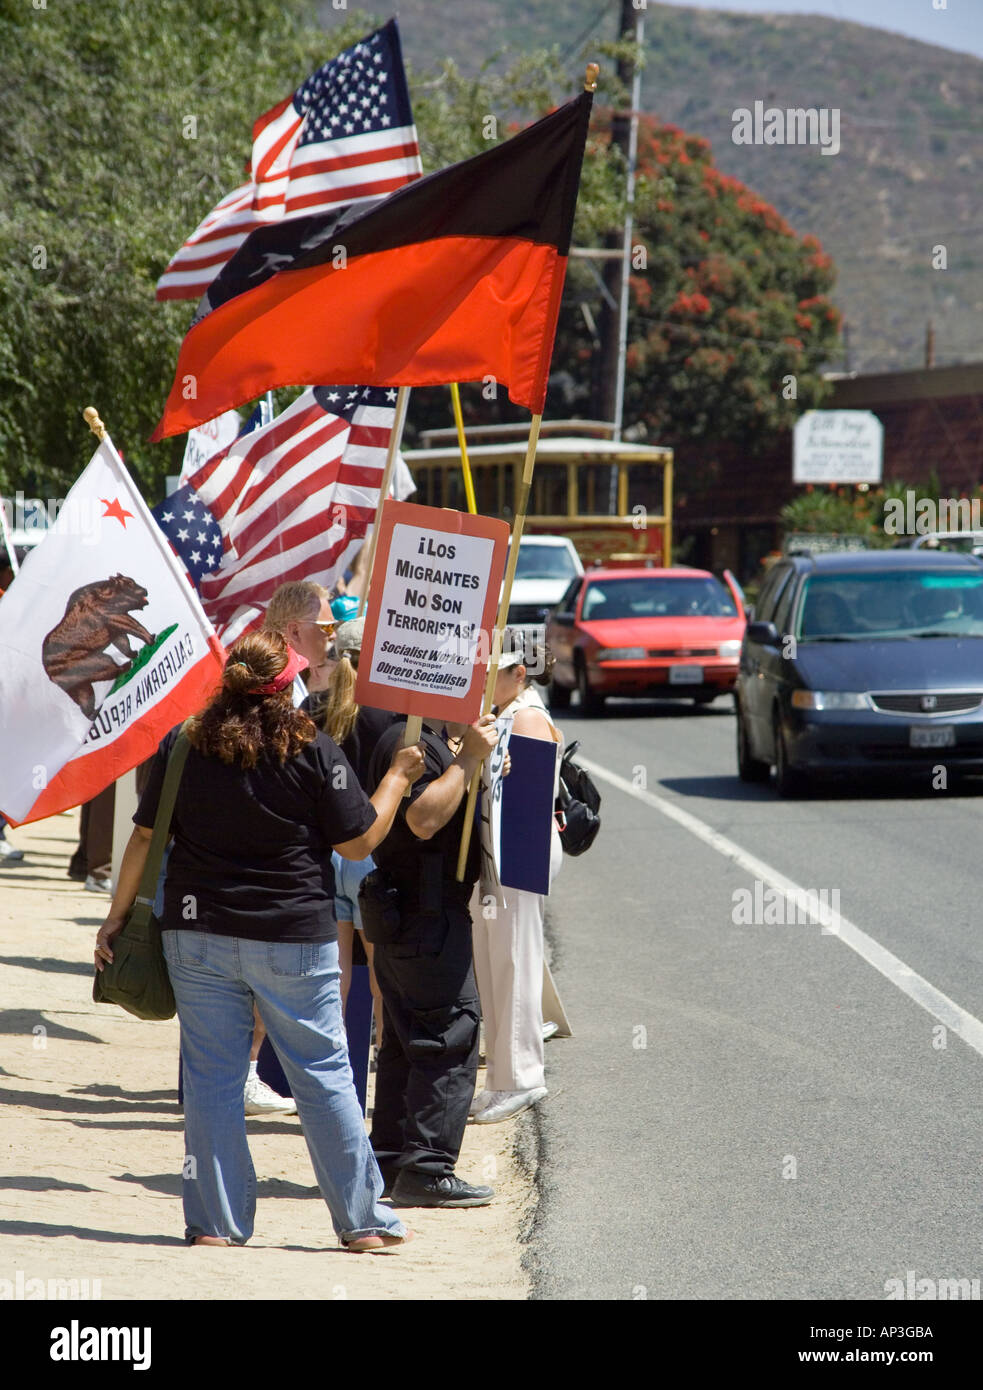 White and Hispanic demonstrators support minority day laborers to passing motorists at a hiring center in Laguna Beach CA Stock Photo